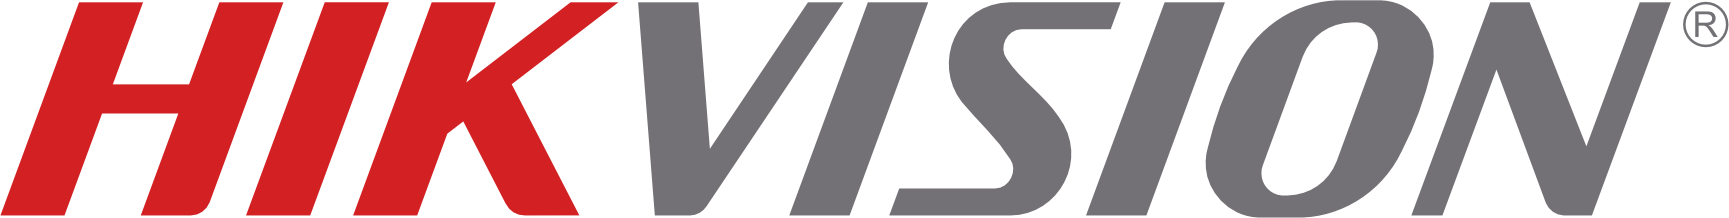 HIKVISION logo